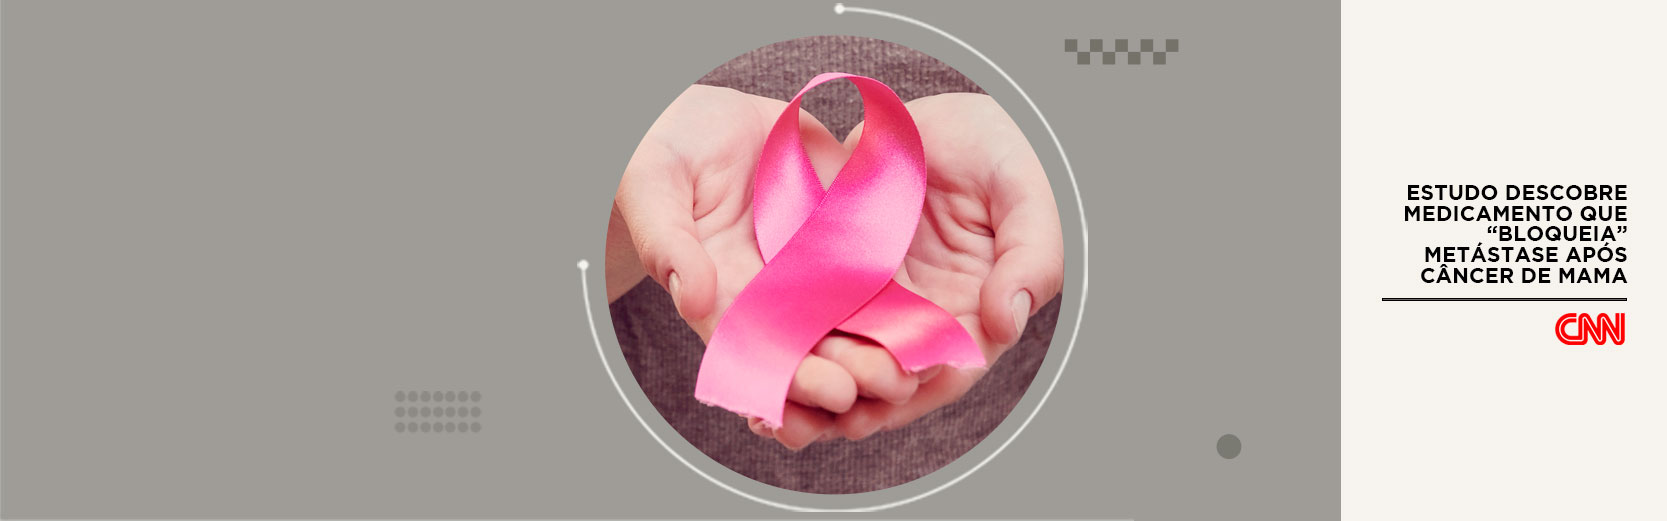 Estudo descobre medicamento que “bloqueia” metástase após câncer de mama